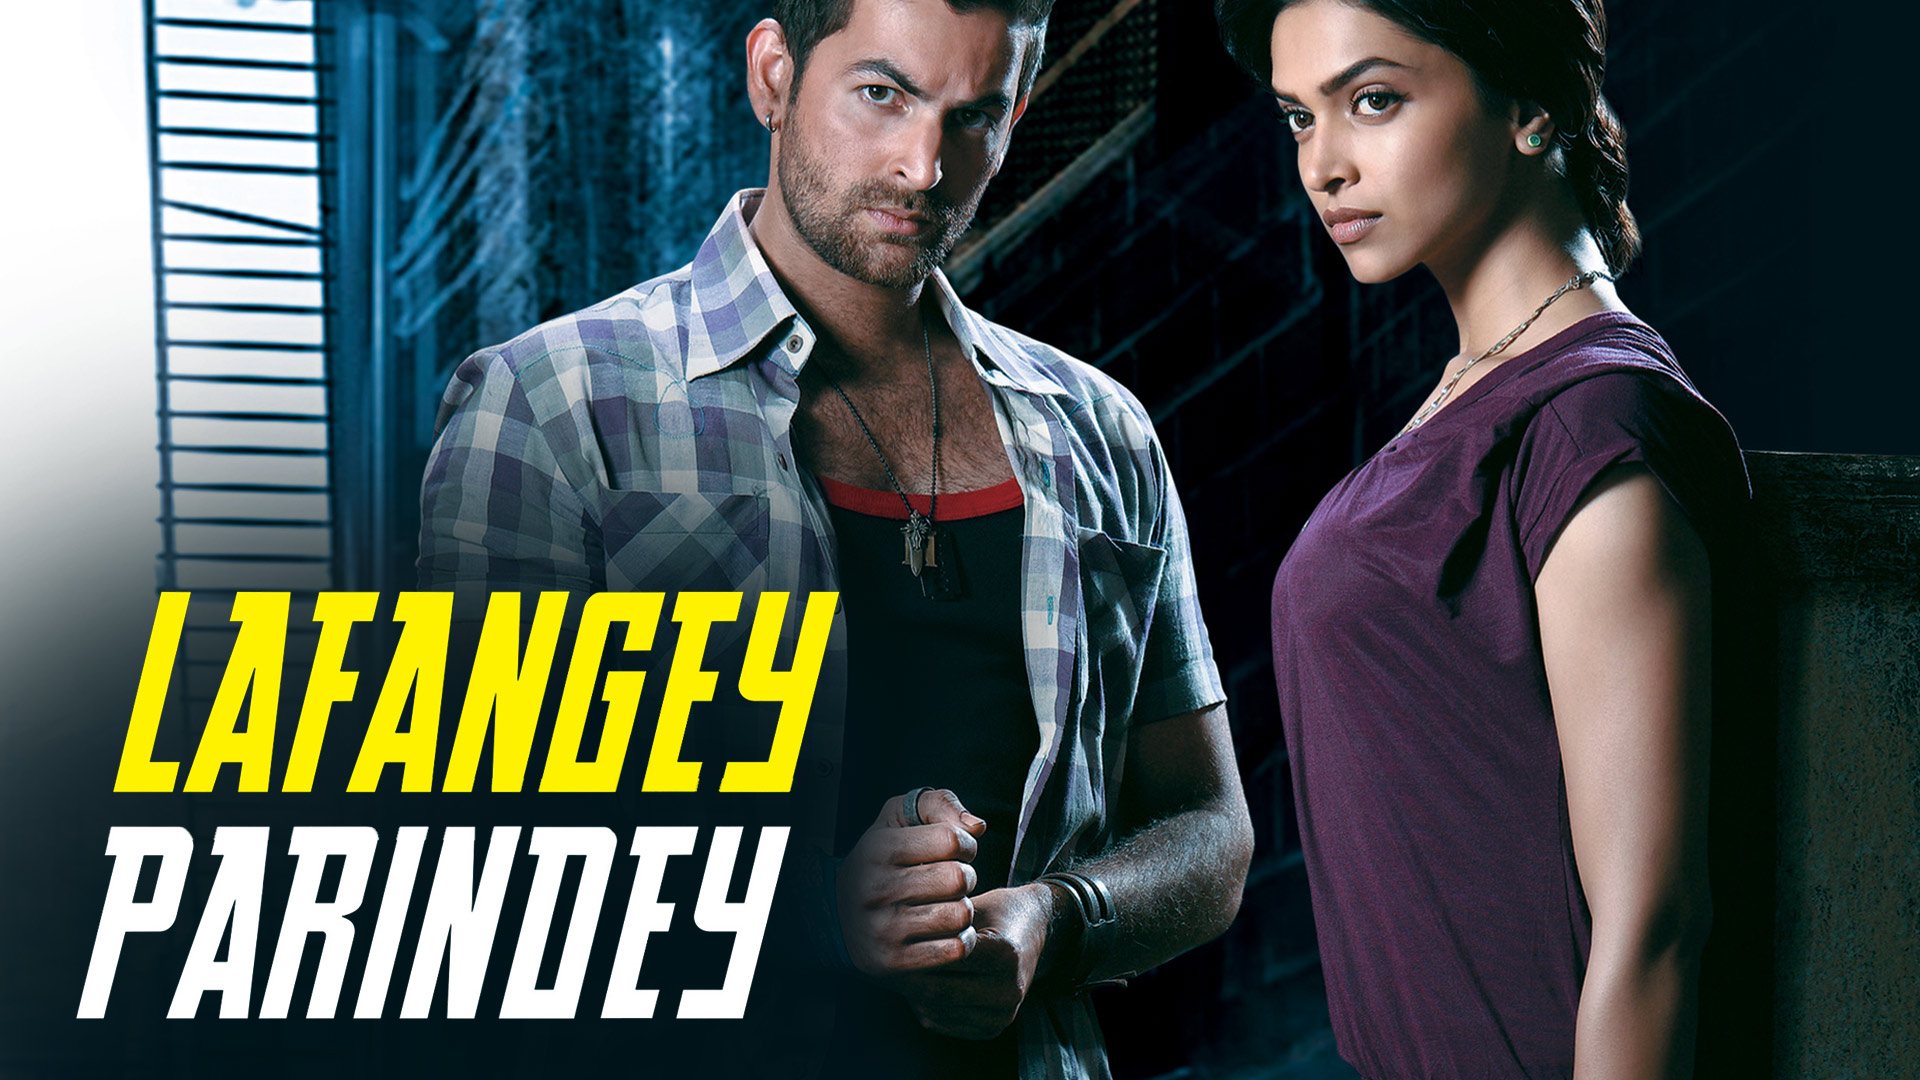 Lafangey Parindey (2010) Hindi Google Drive Download